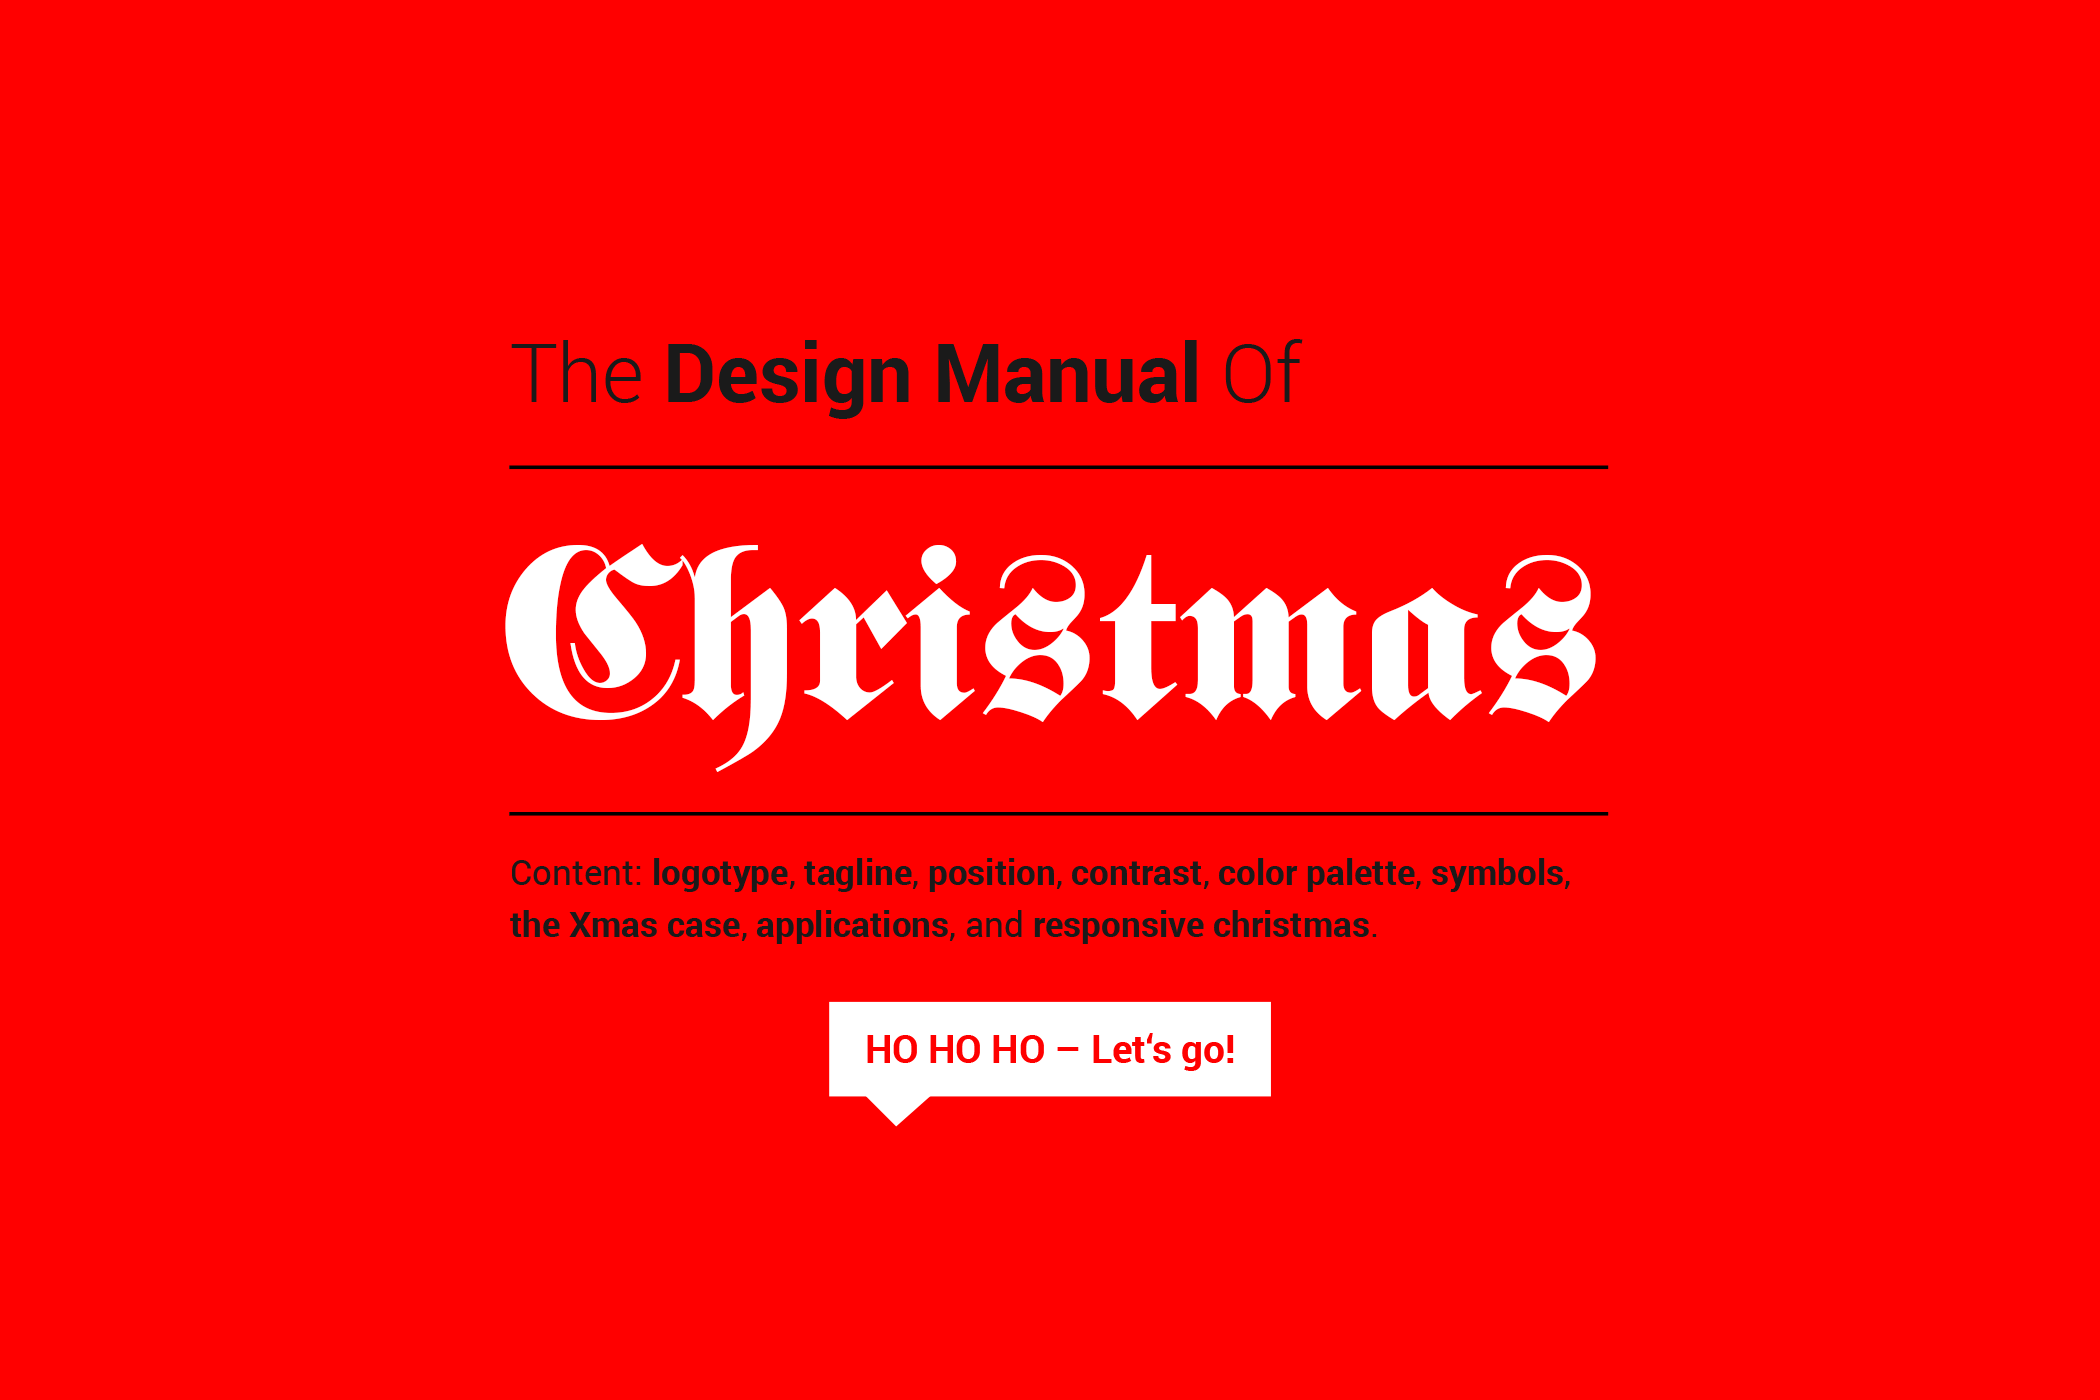 Design Manual of Christmas